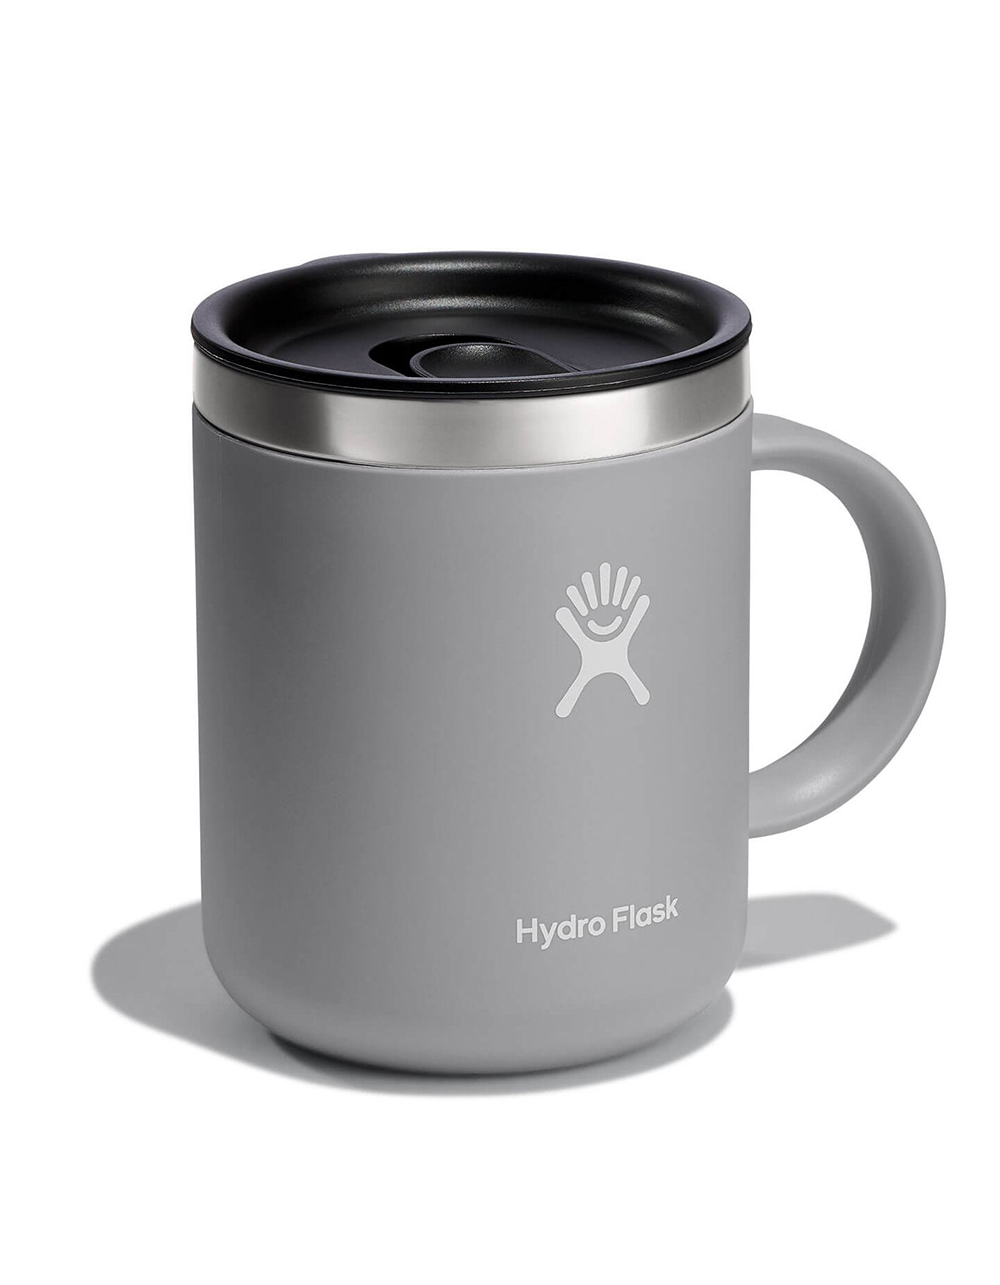 Hydro Flask 24 Oz Mugs $25 Ea And 6oz Mug - $10 for Sale in Laguna